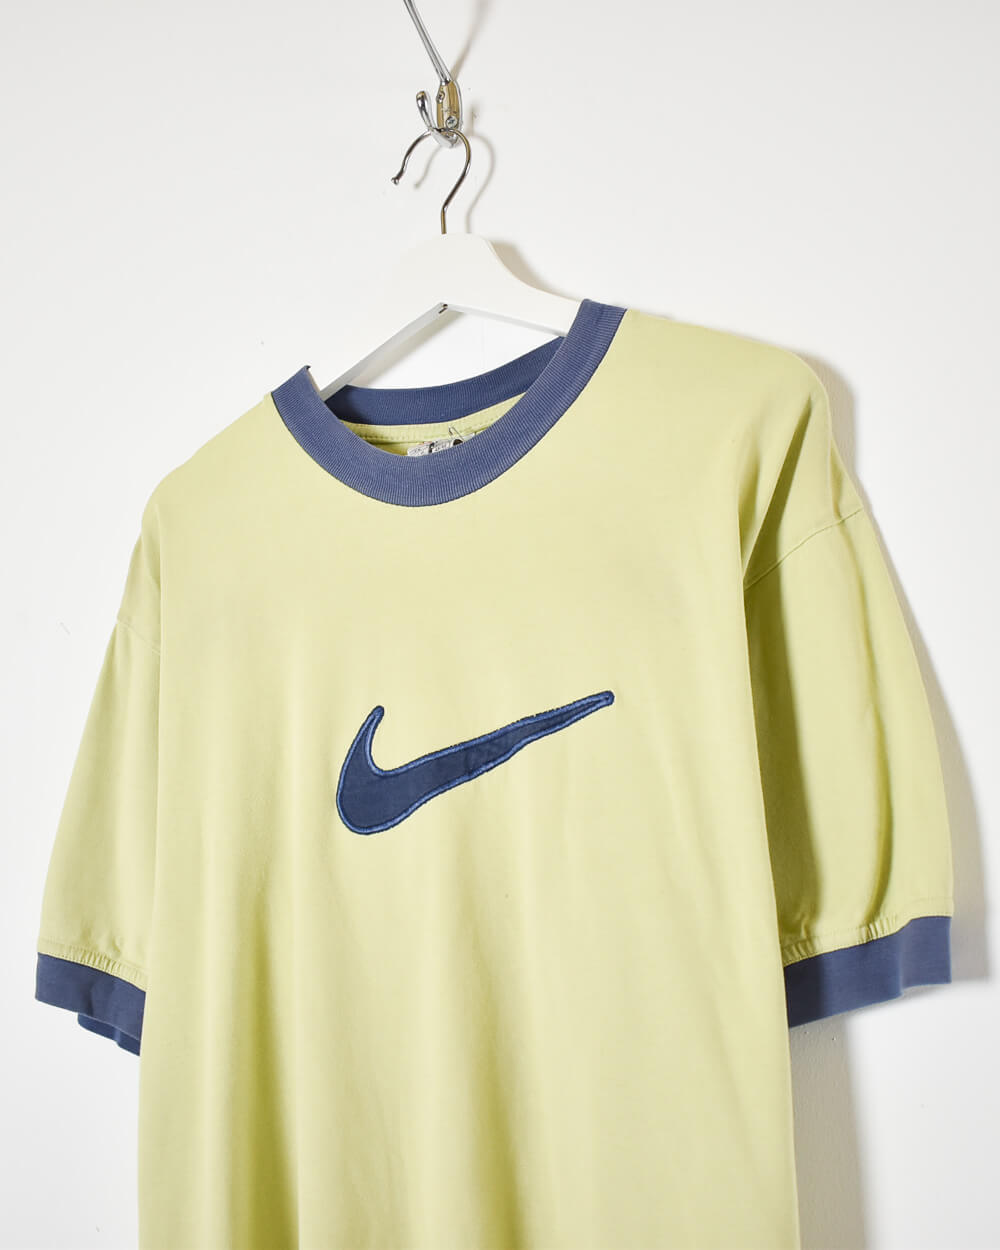 Green Nike T-Shirt - Medium